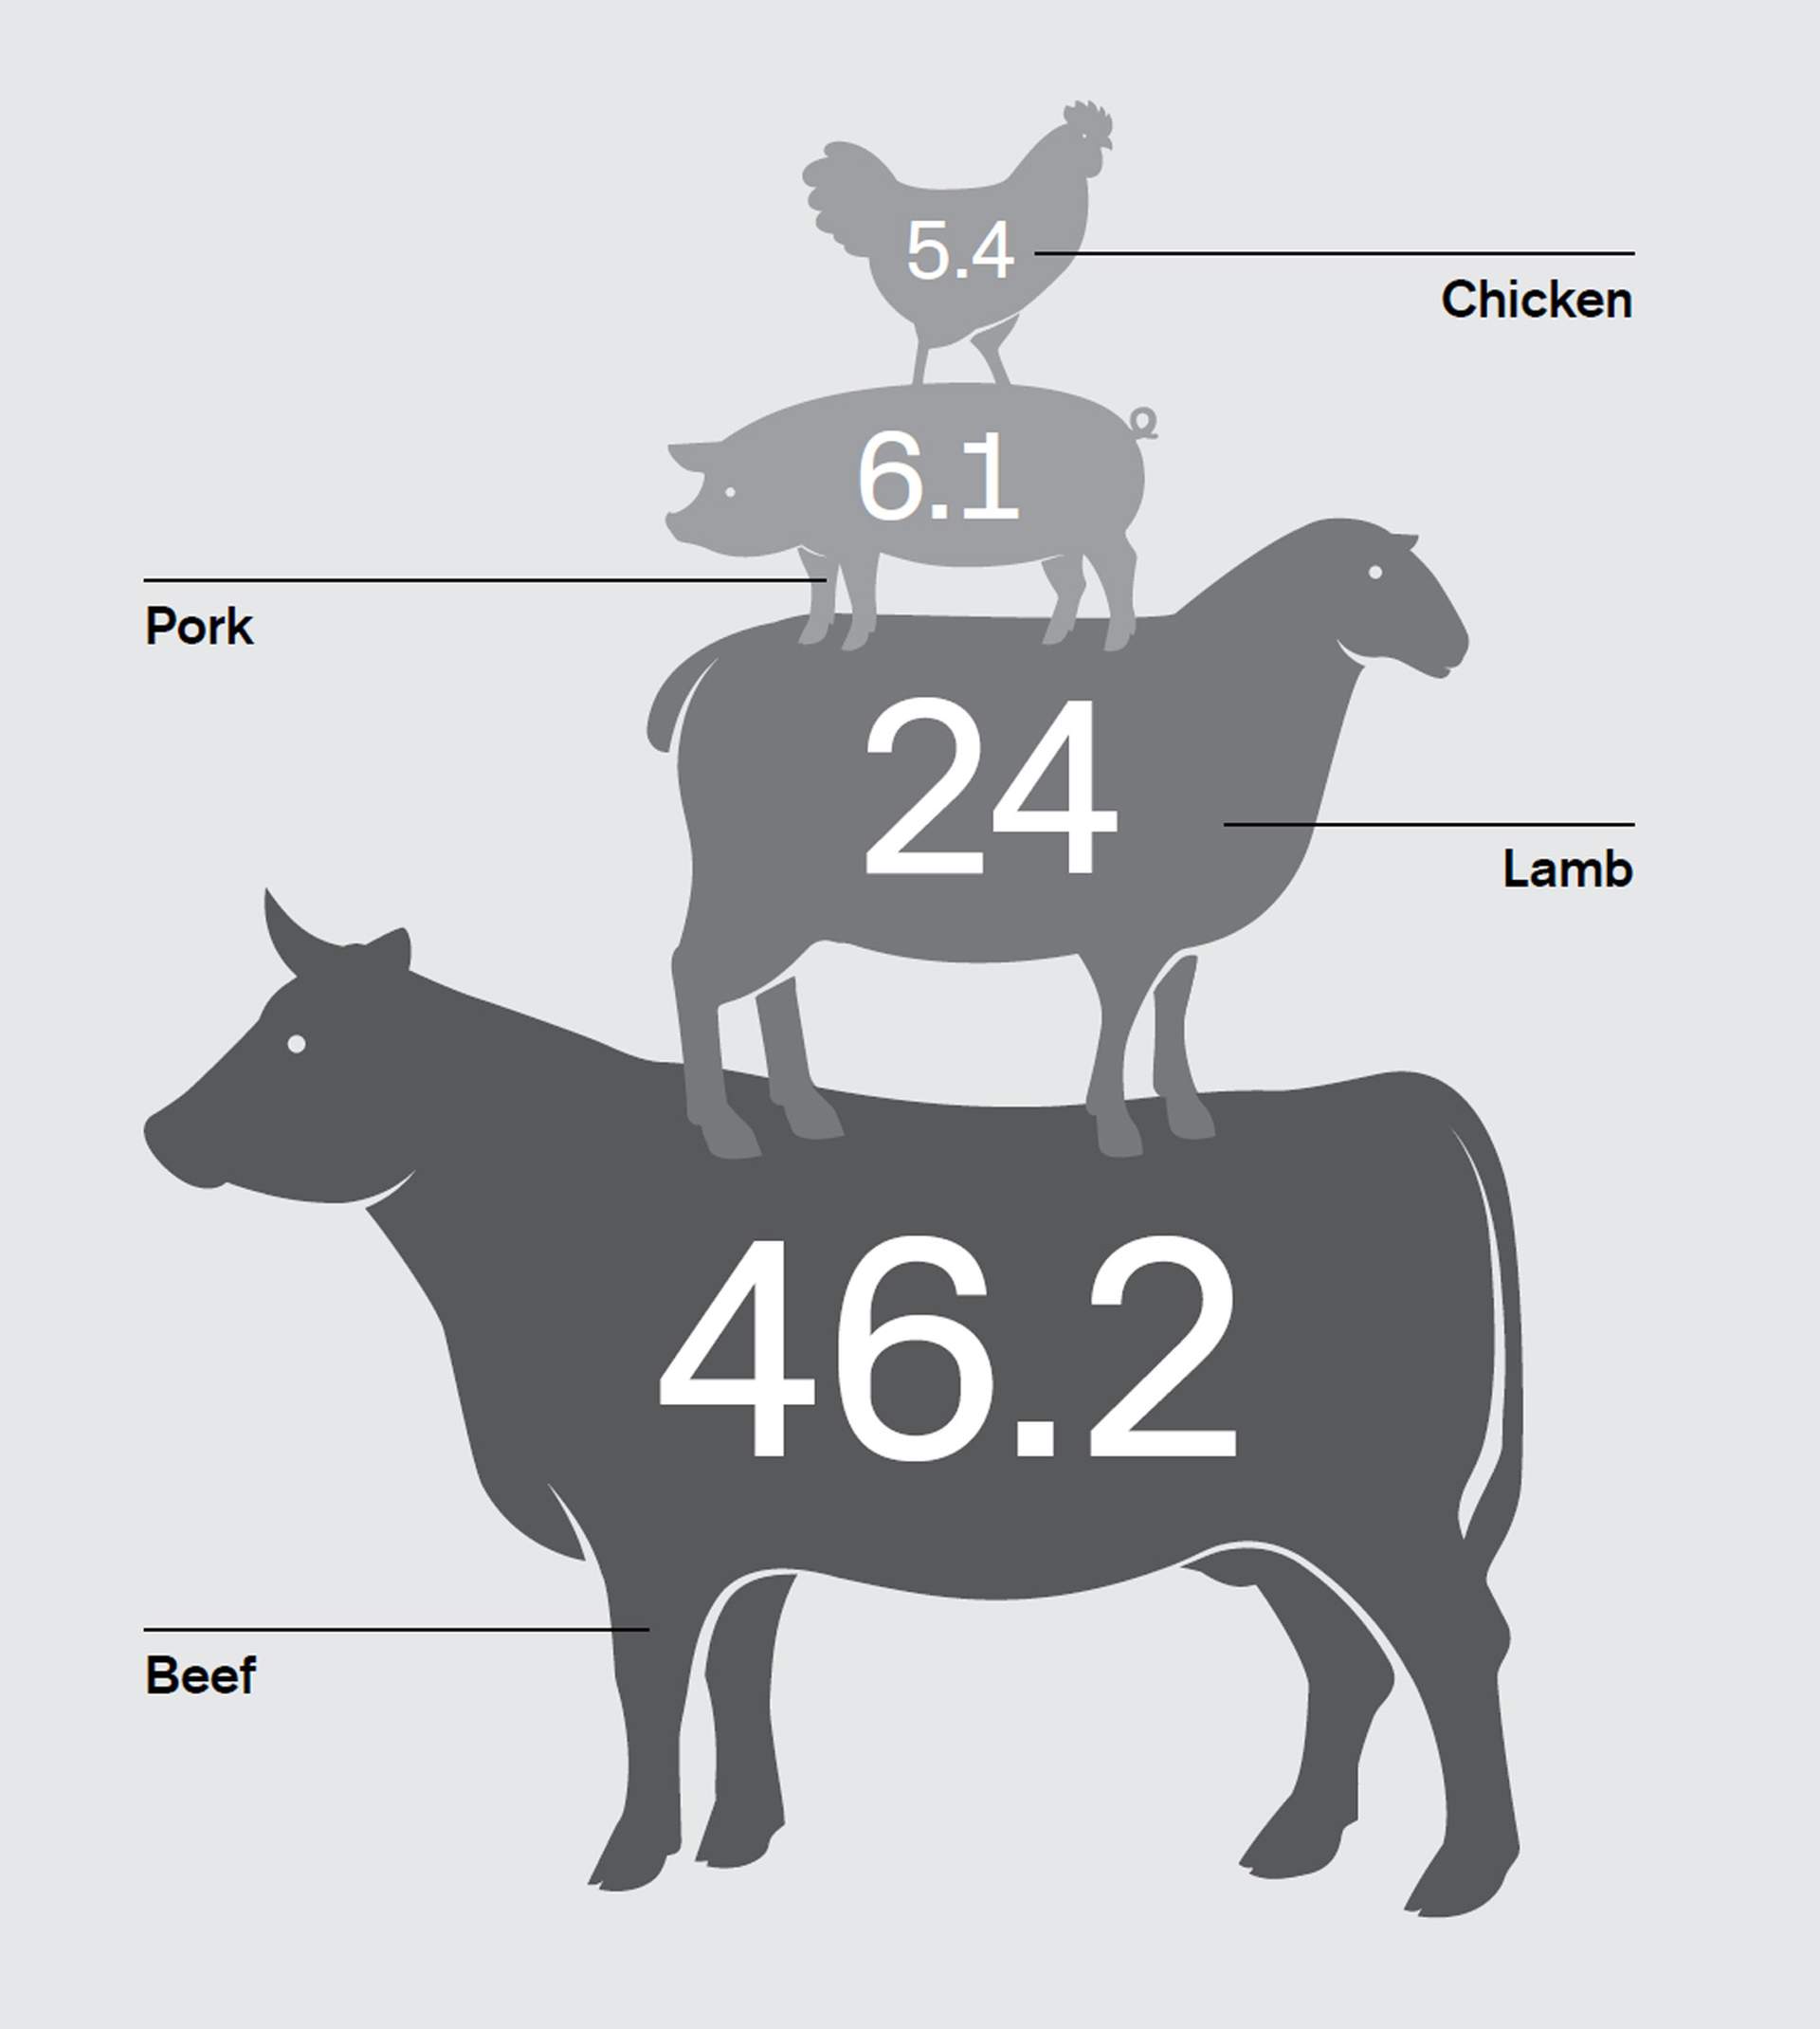 CO2 equivalents per kg meat